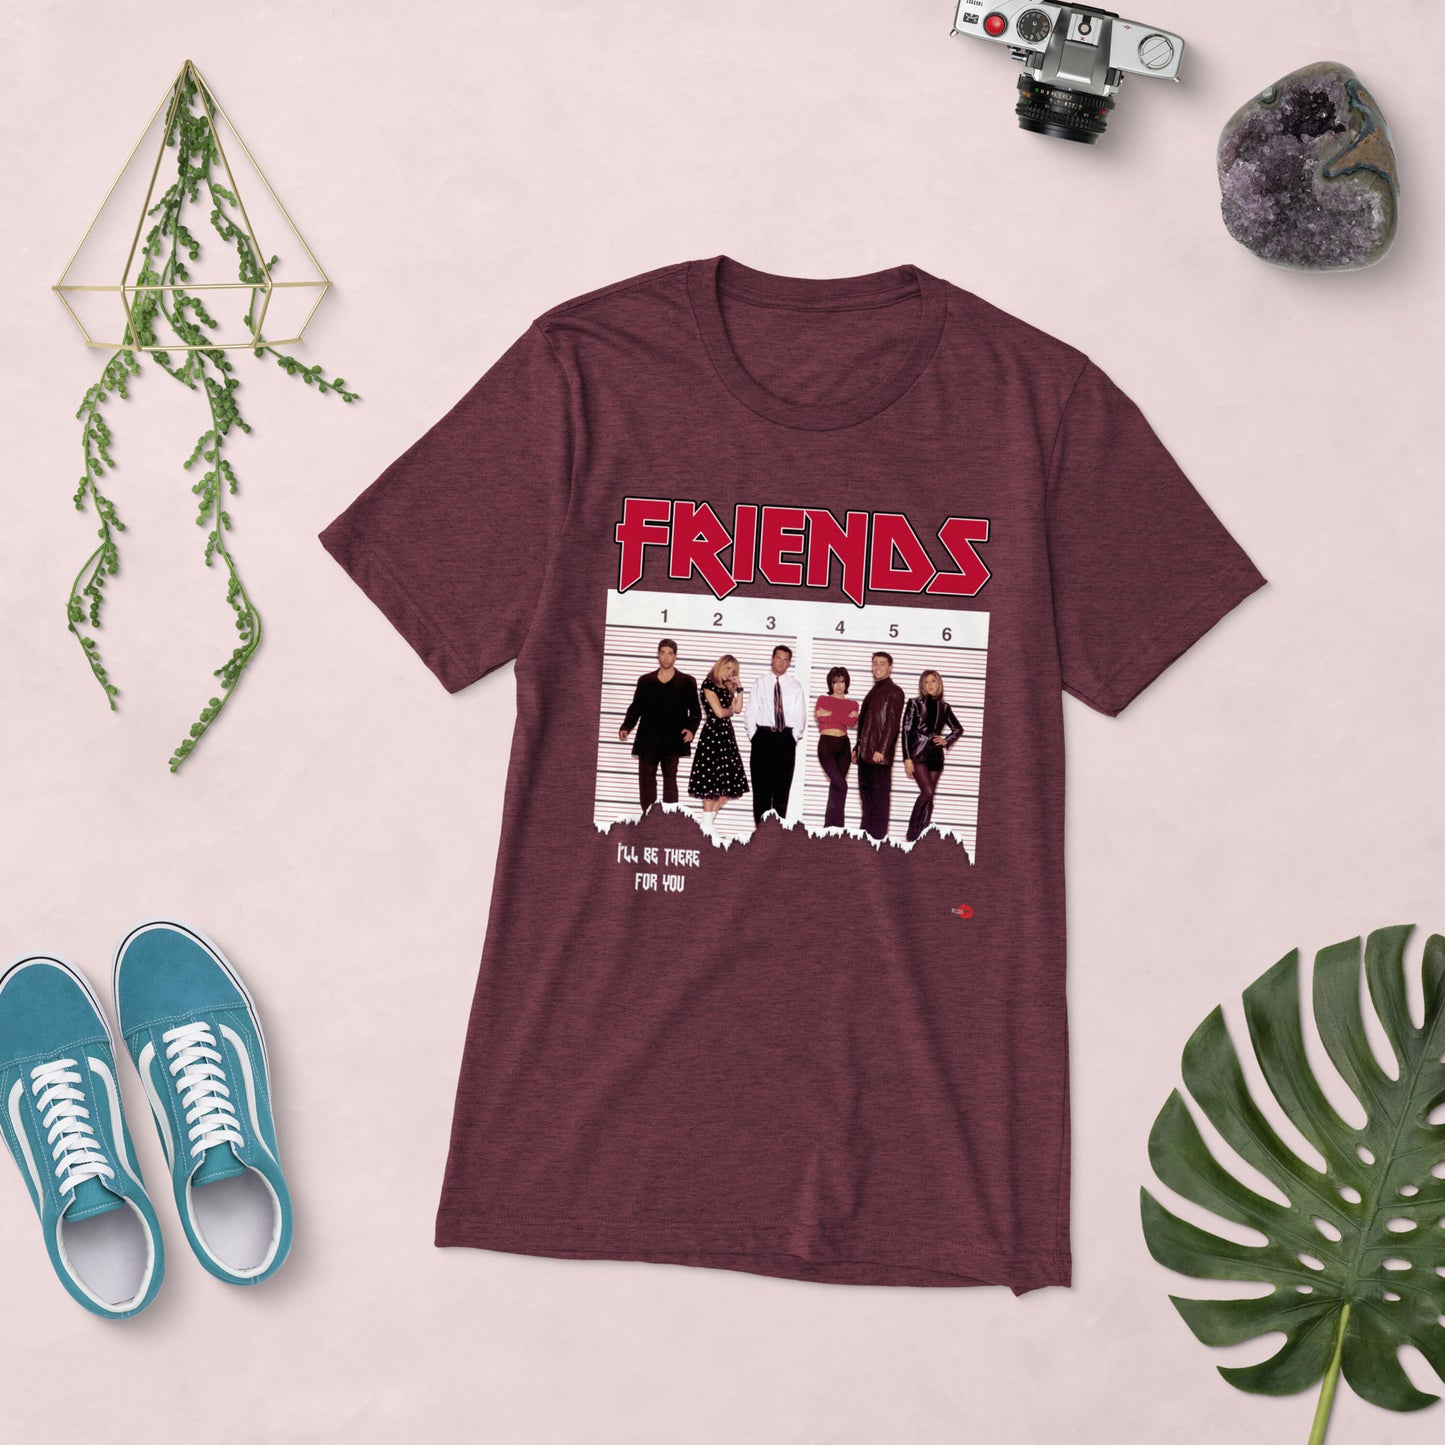 Friends 'Band Tee' Tour 94 KiSS Short sleeve t-shirt - New York City Tour Rock theme tv show